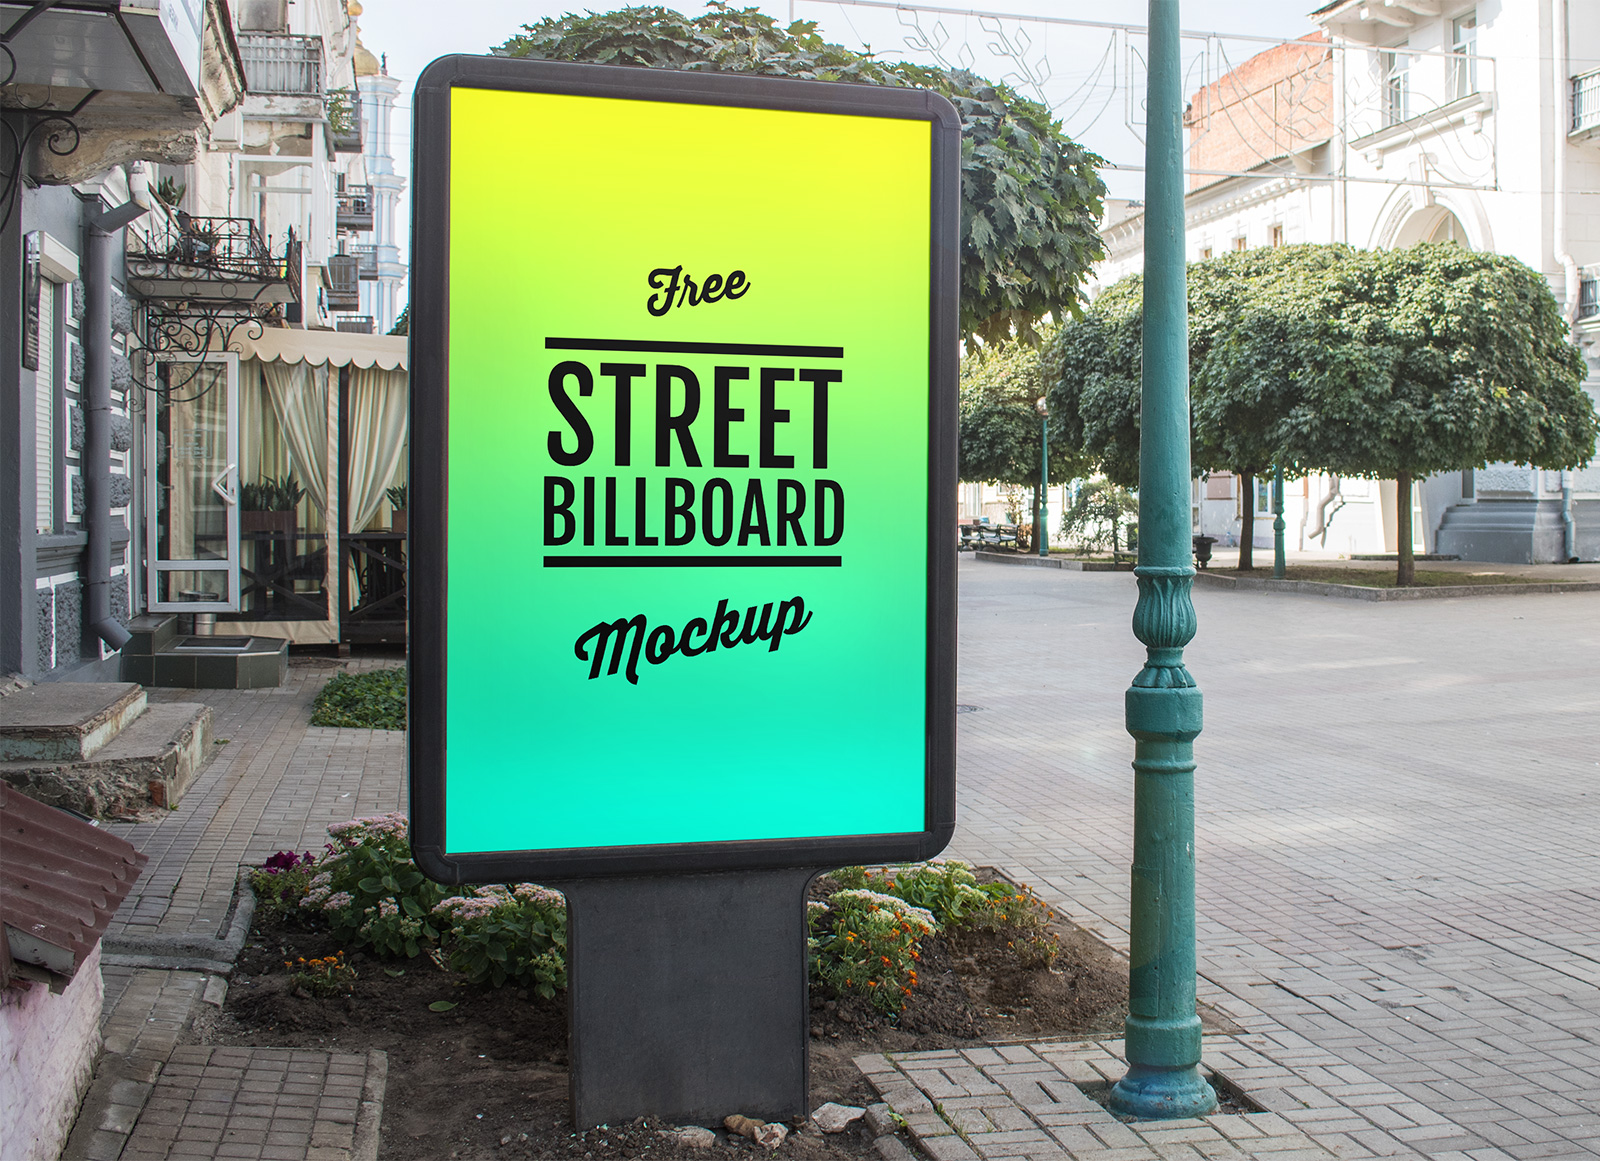 Free-Outdoor-Advertising-Display-Street-Billboard-Mockup-PSD-2